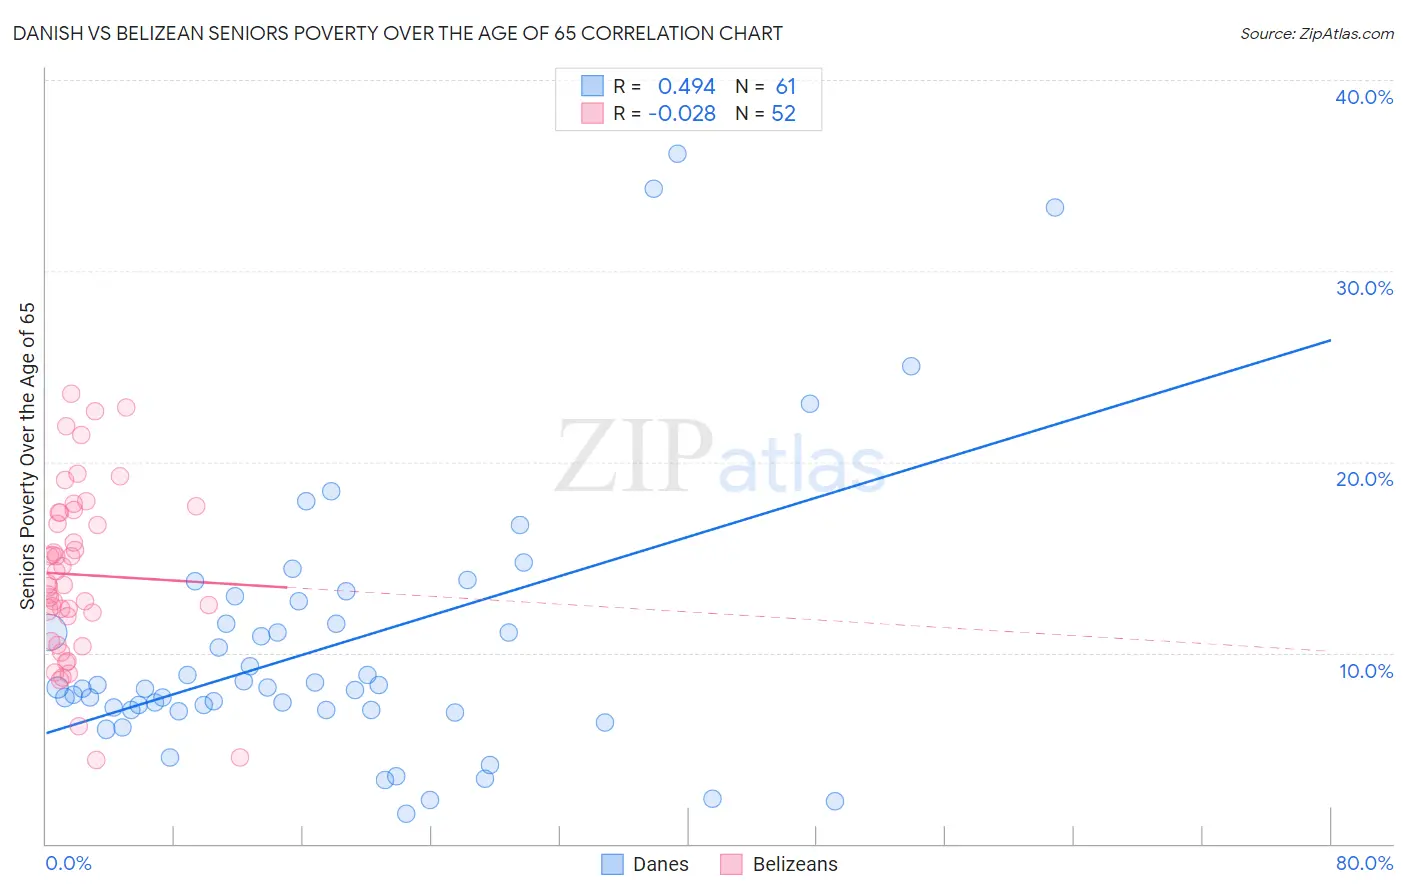 Danish vs Belizean Seniors Poverty Over the Age of 65